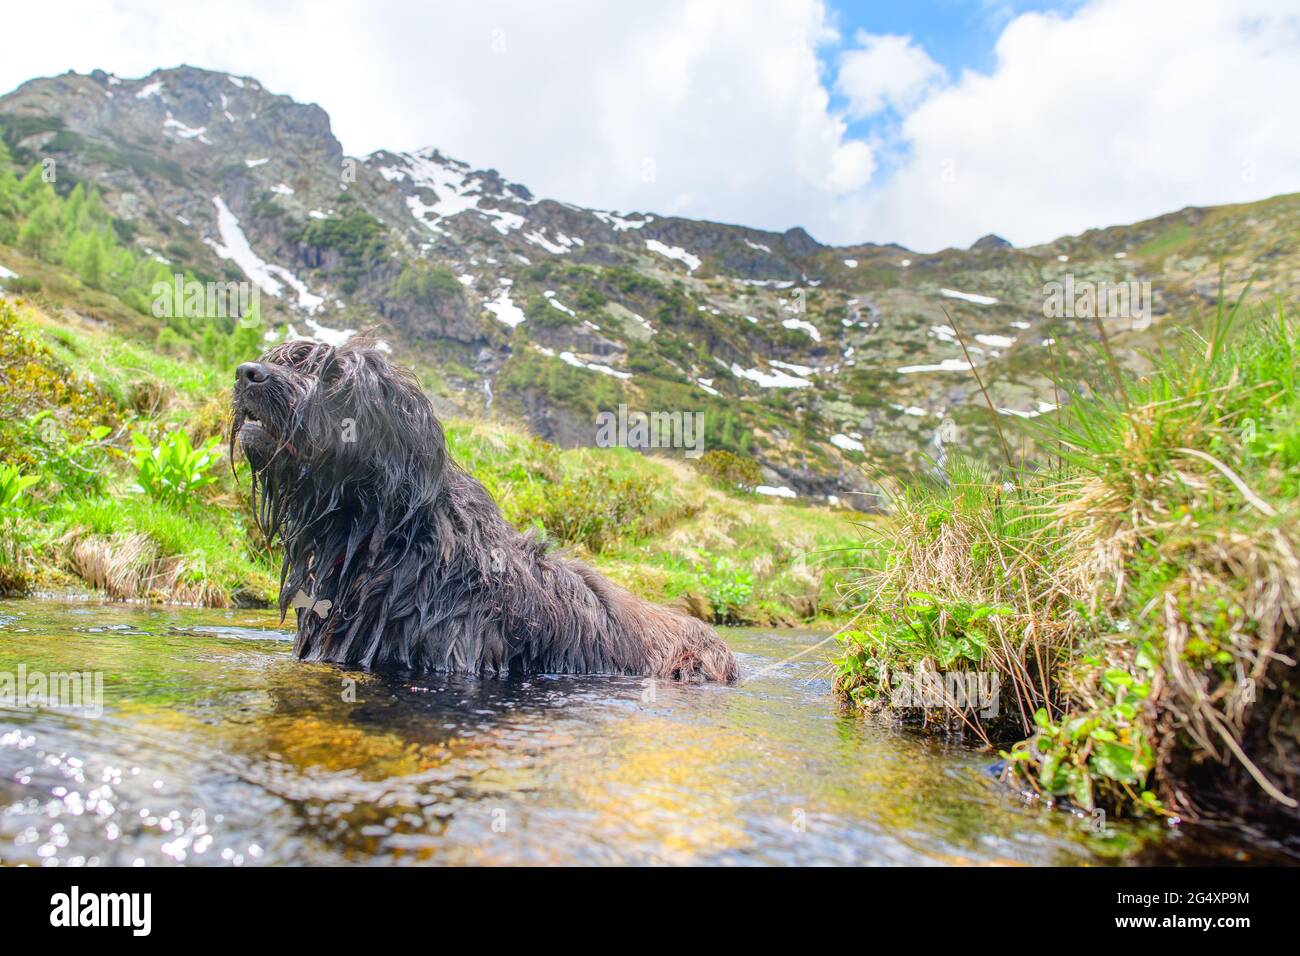 Bergamasco Shepherd dog bathes in a pool of water Stock Photo